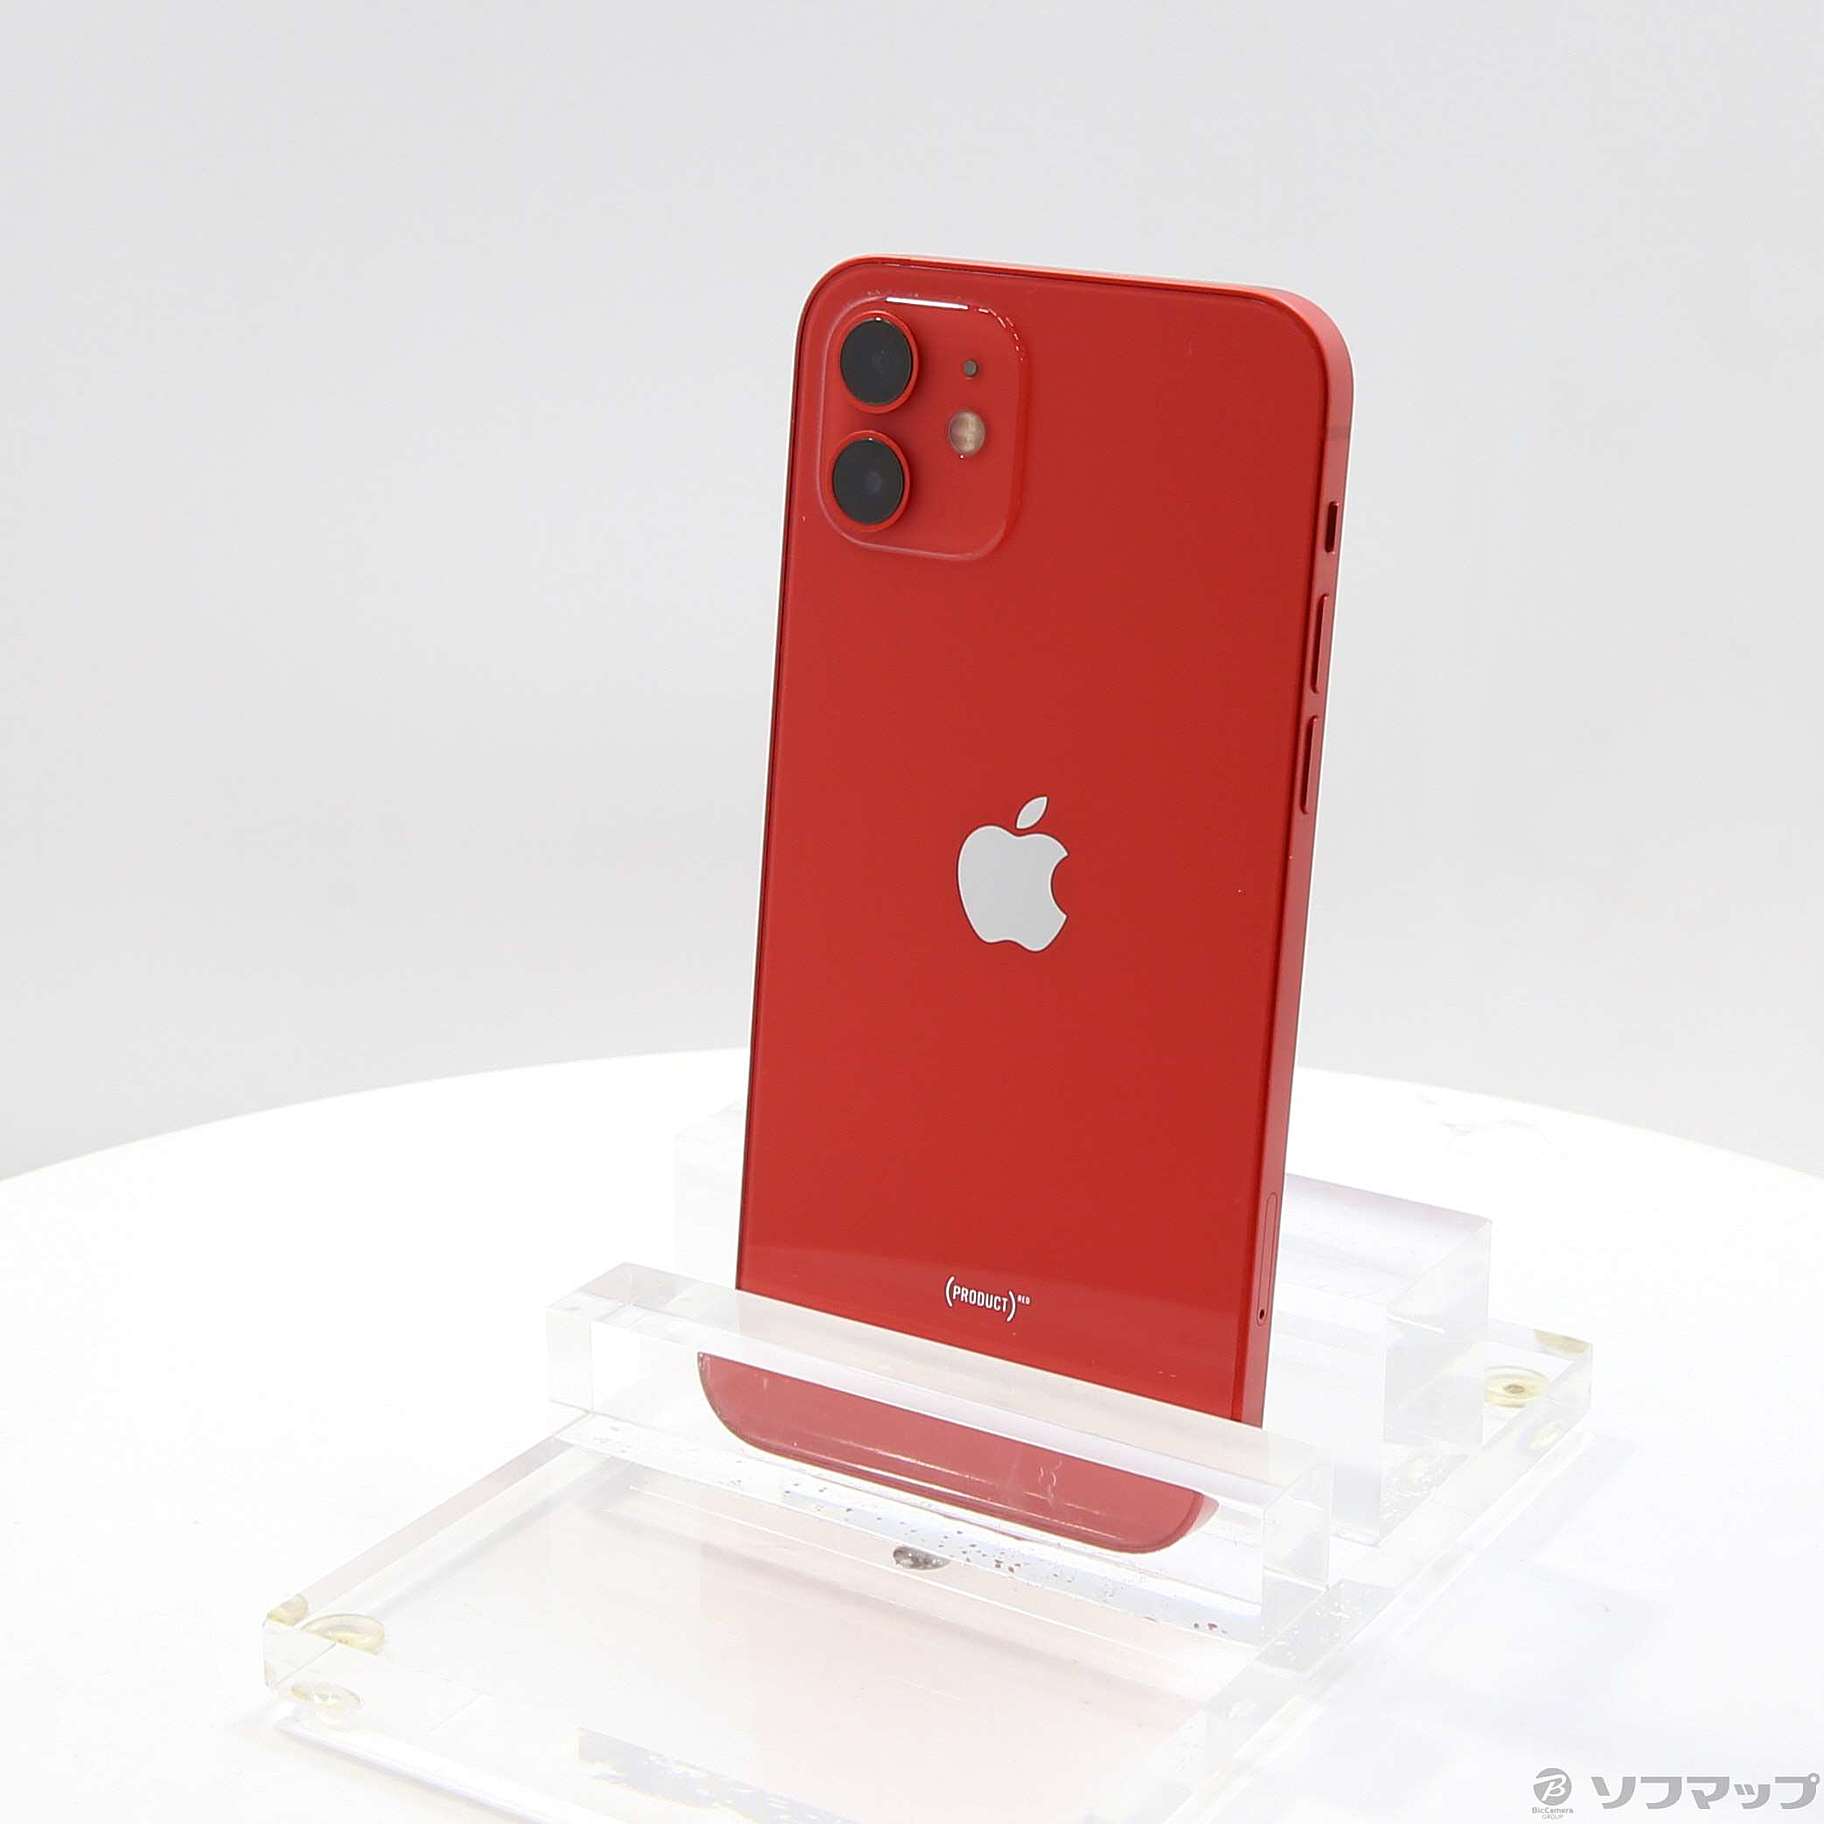 iPhone 12 (PRODUCT)RED 256GB SIMフリー [レッド] 中古(白ロム)価格 ...